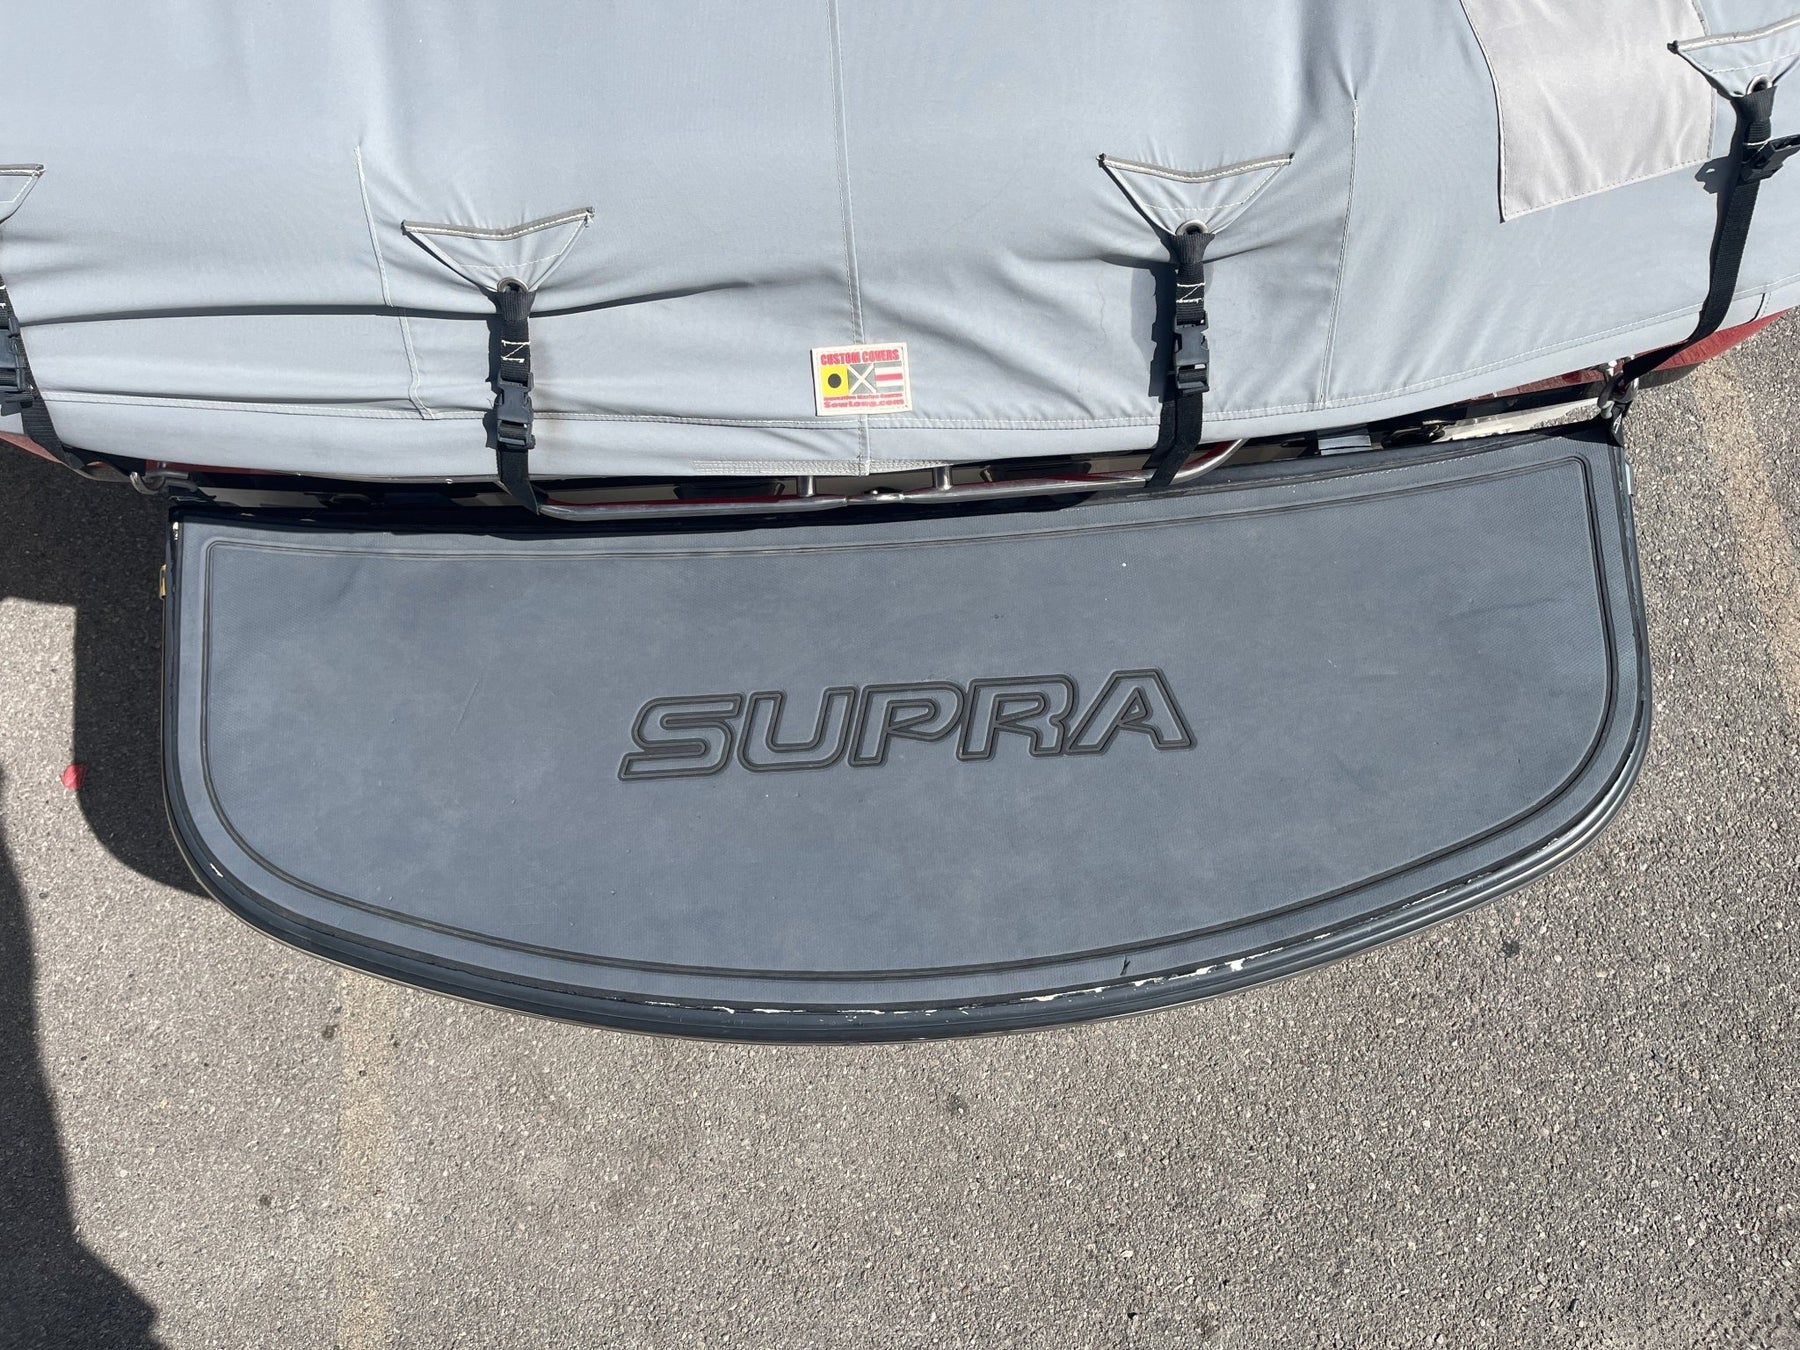 Supra Rounded Swim Platform Cover - BoardCo